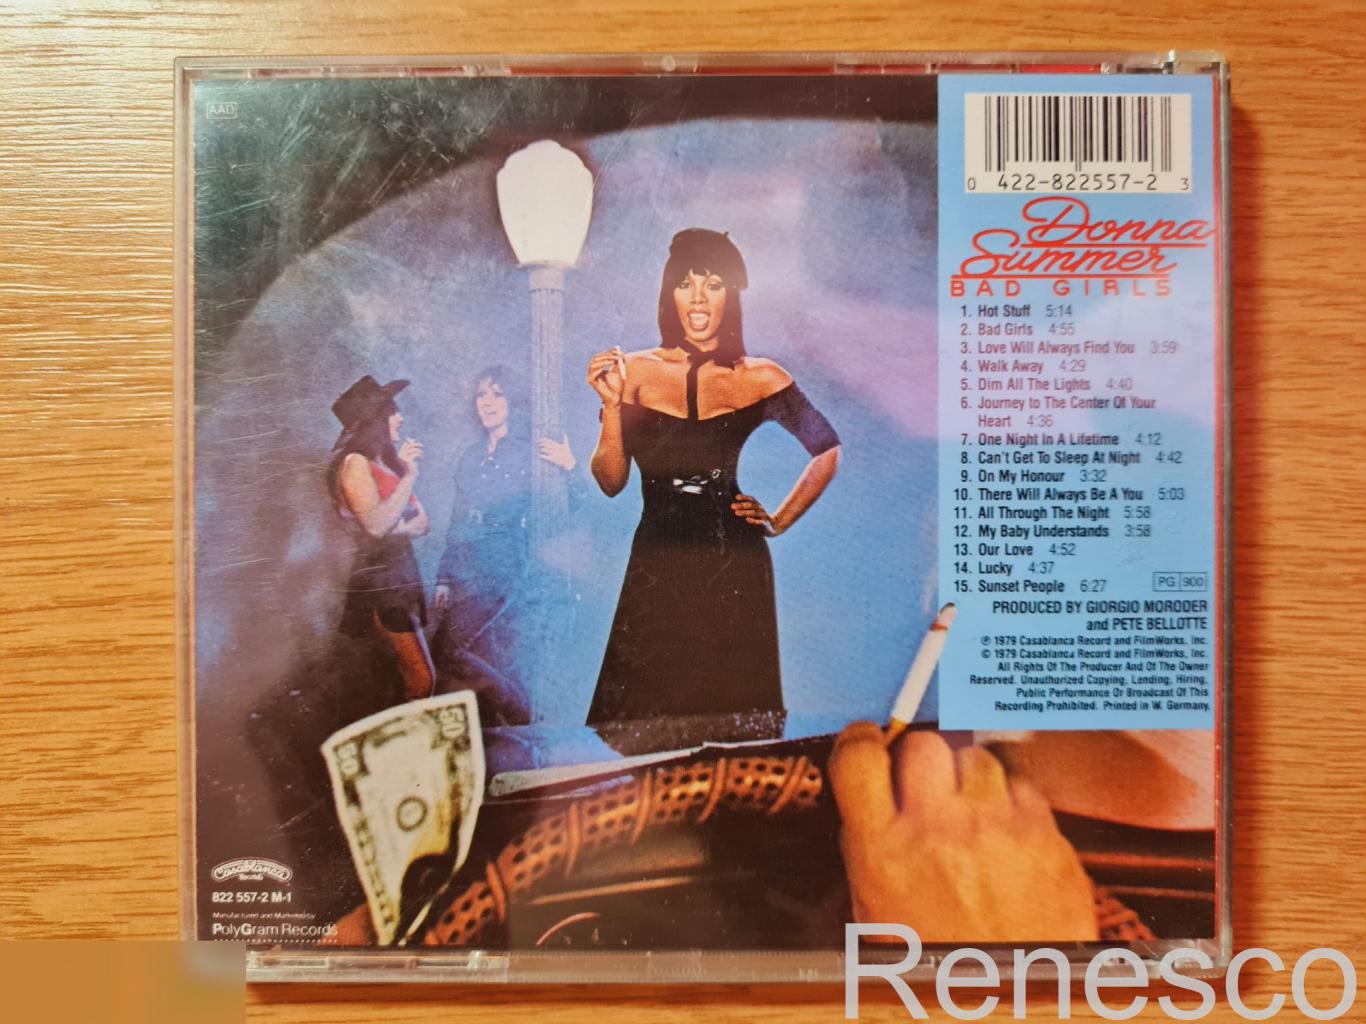 Donna Summer ?– Bad Girls (Germany) (Reissue) 1